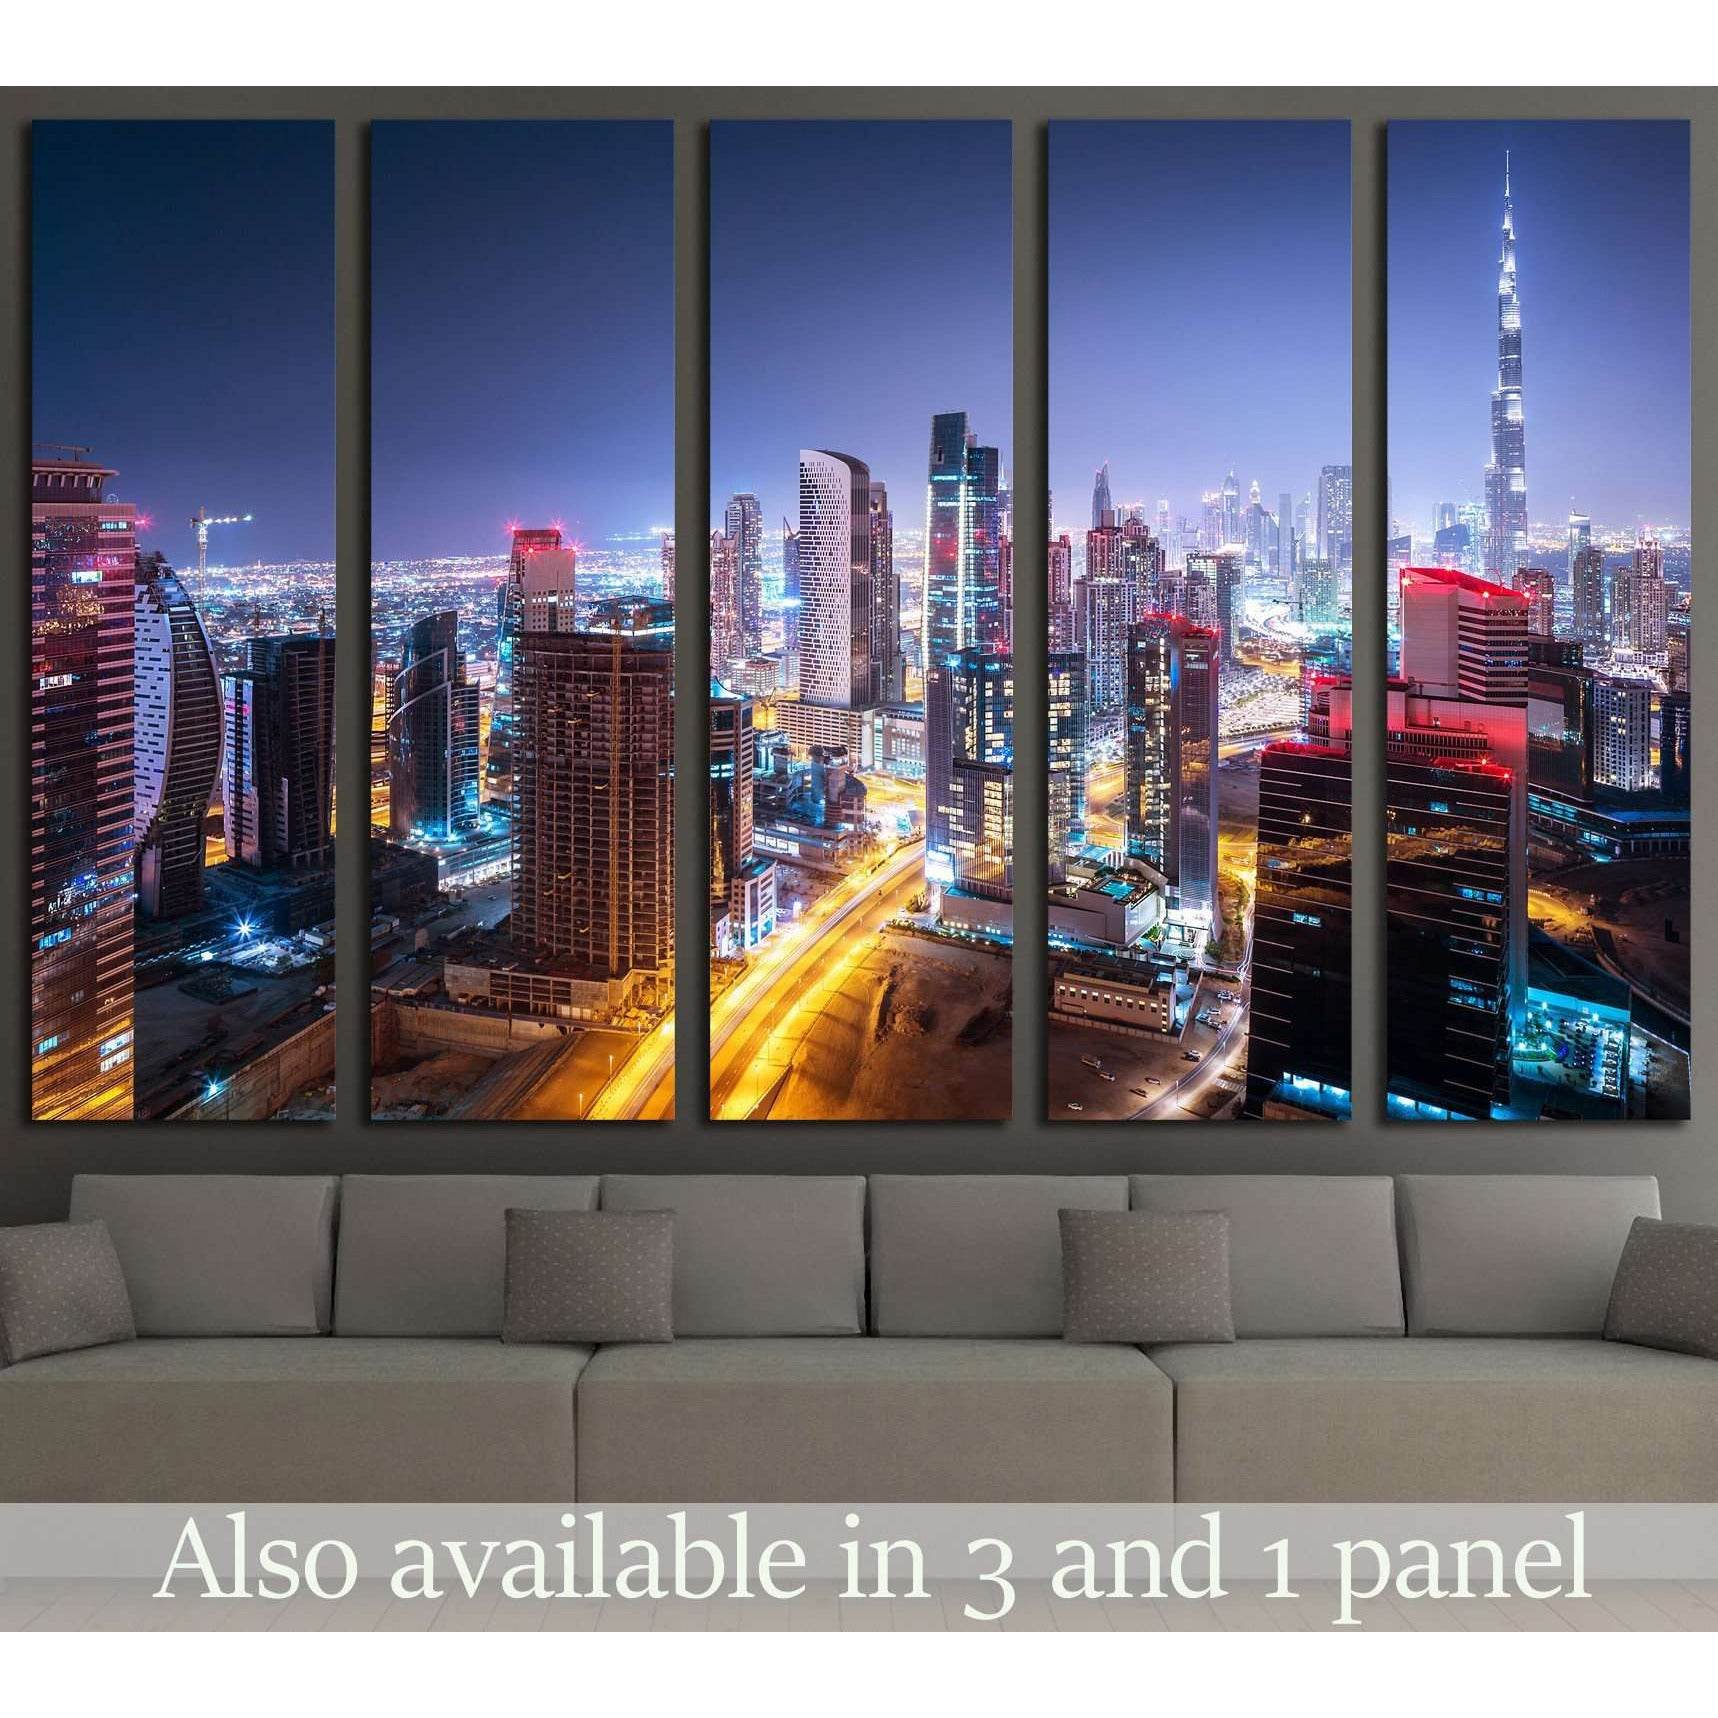 Dubai cityscape №559 Ready to Hang Canvas Print